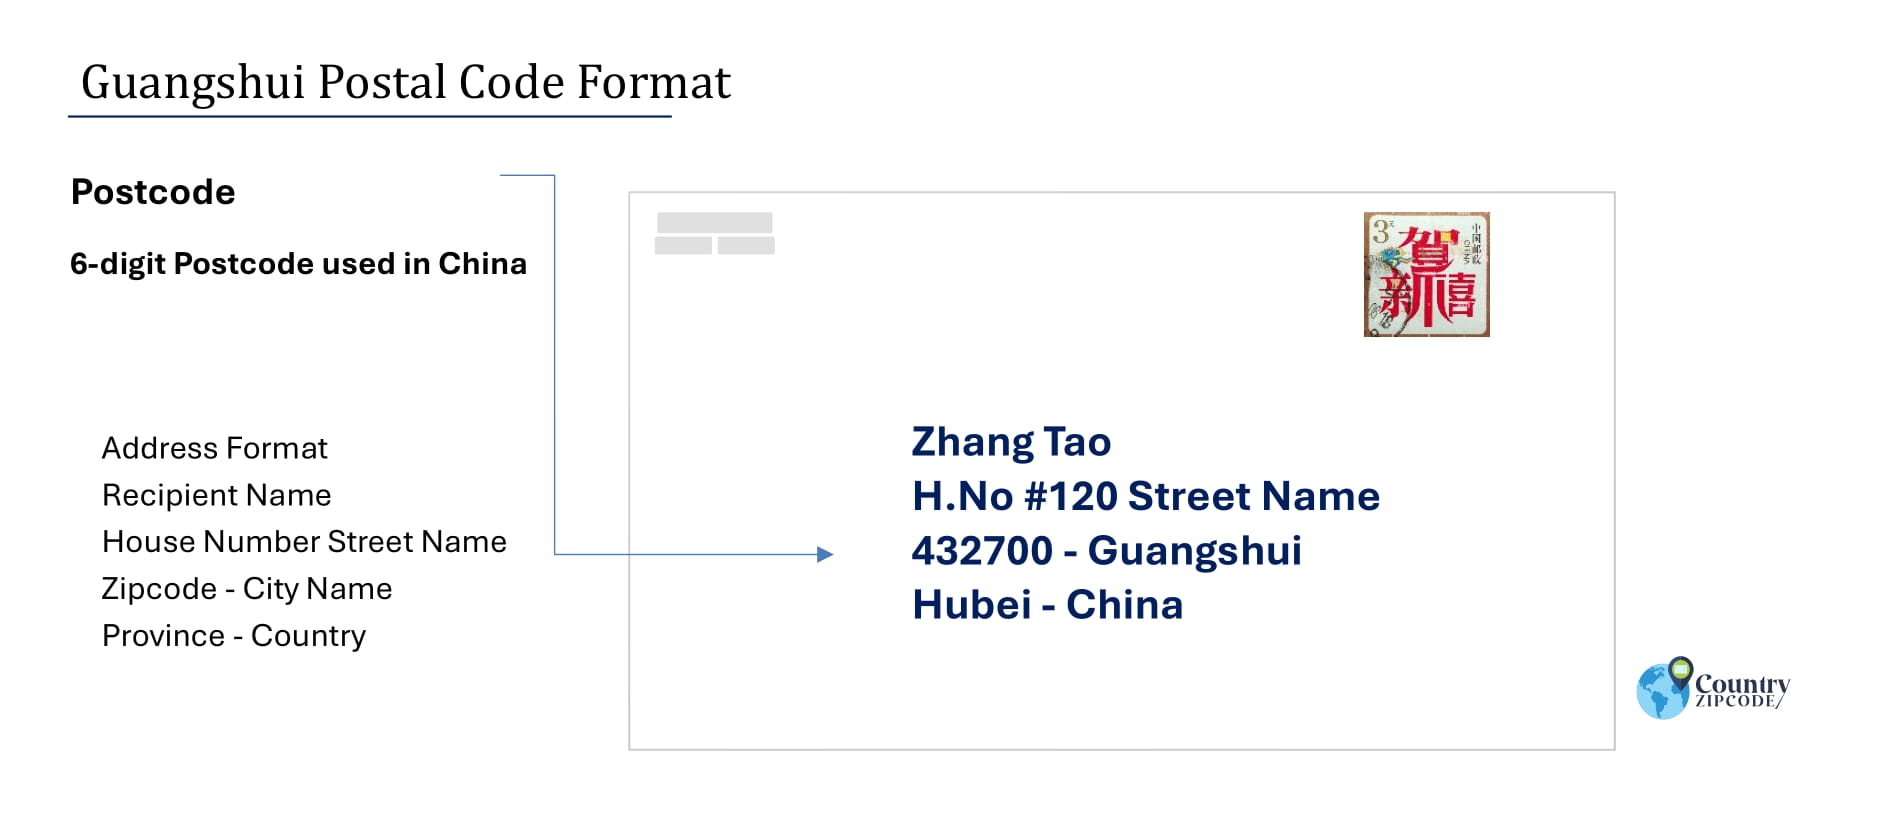 Example of GuangshuiChinaPostalcodeandAddressformat